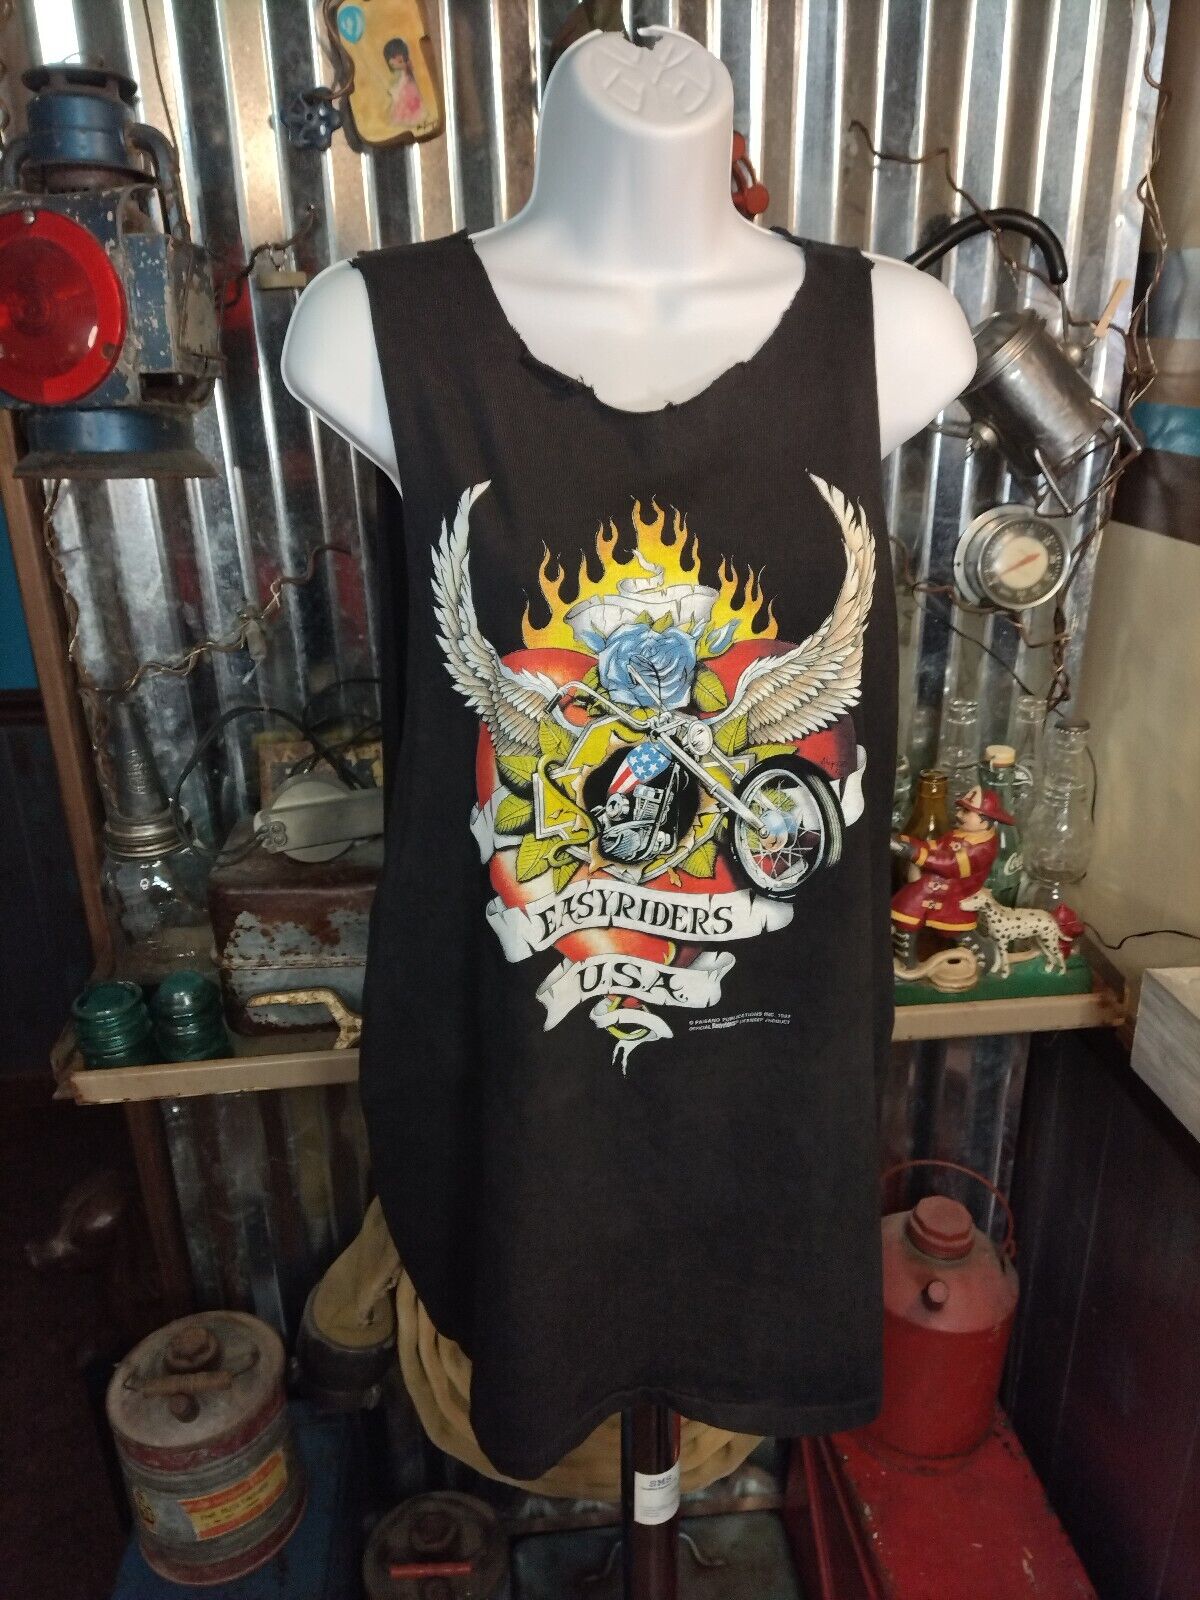 VTG Harley Davidson Easy Rider 1992 Tee Shirt Black T-shirt Size XL cut Tank top